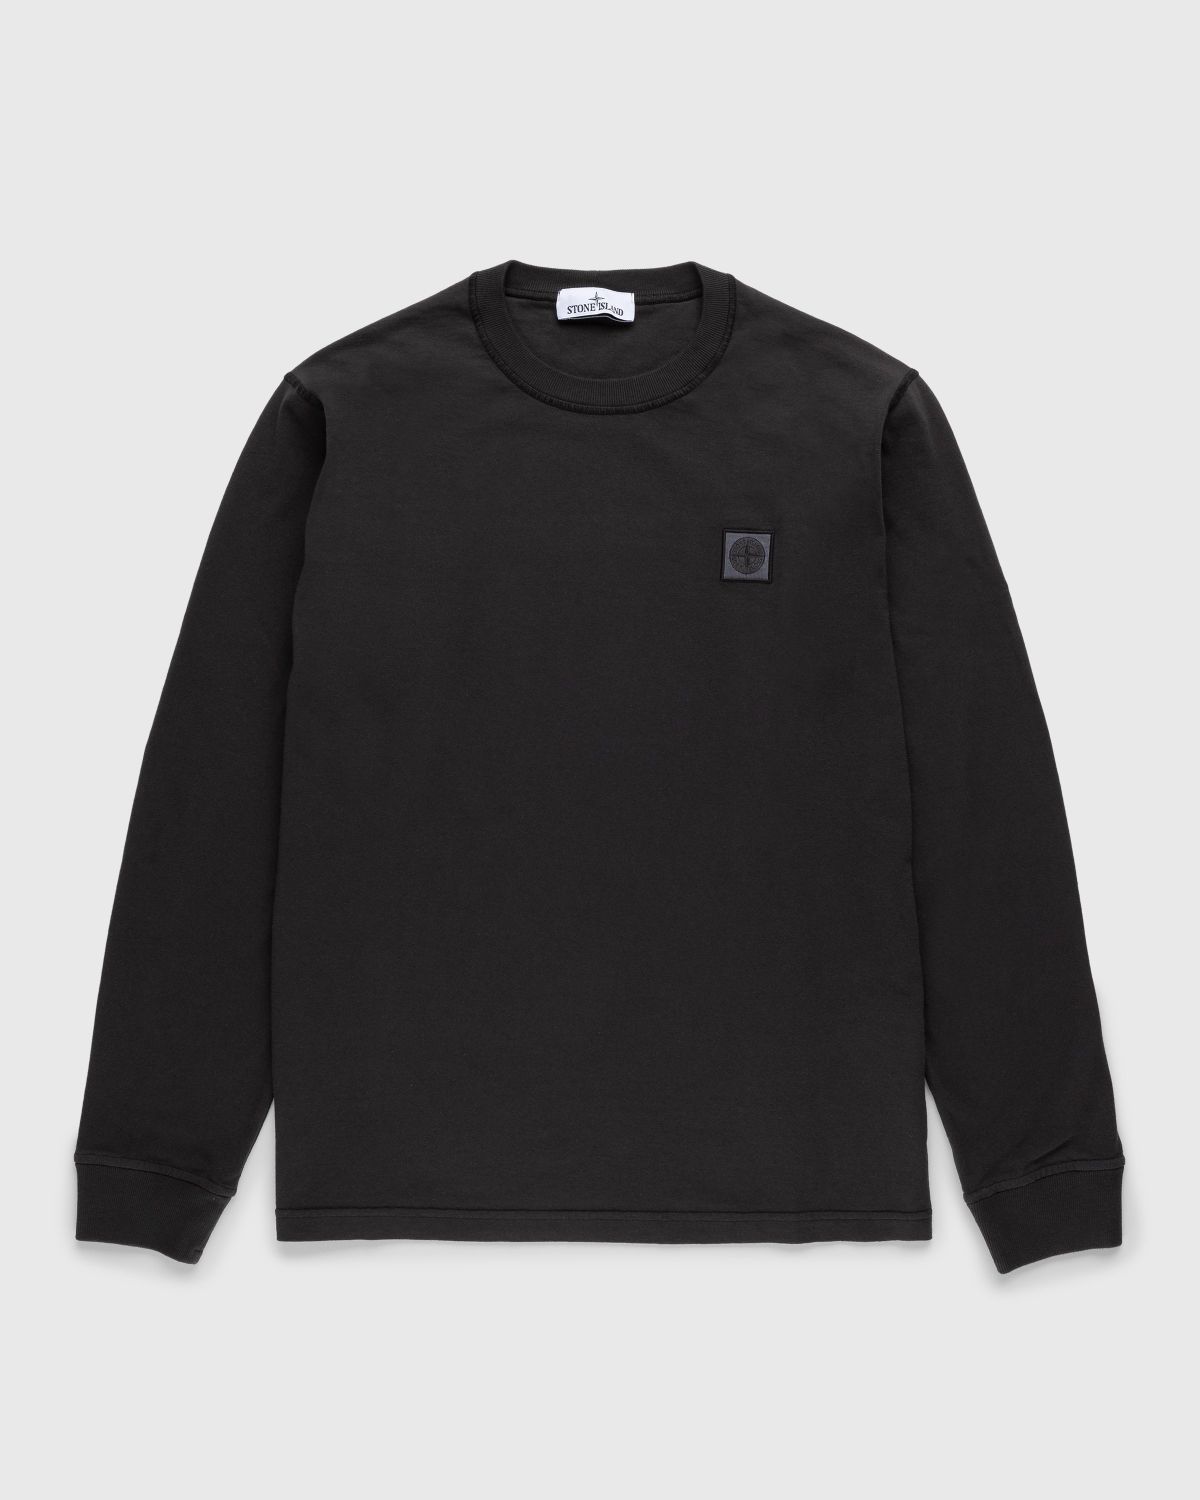 Stone Island – Fissato Longsleeve T-Shirt Charcoal | Highsnobiety Shop